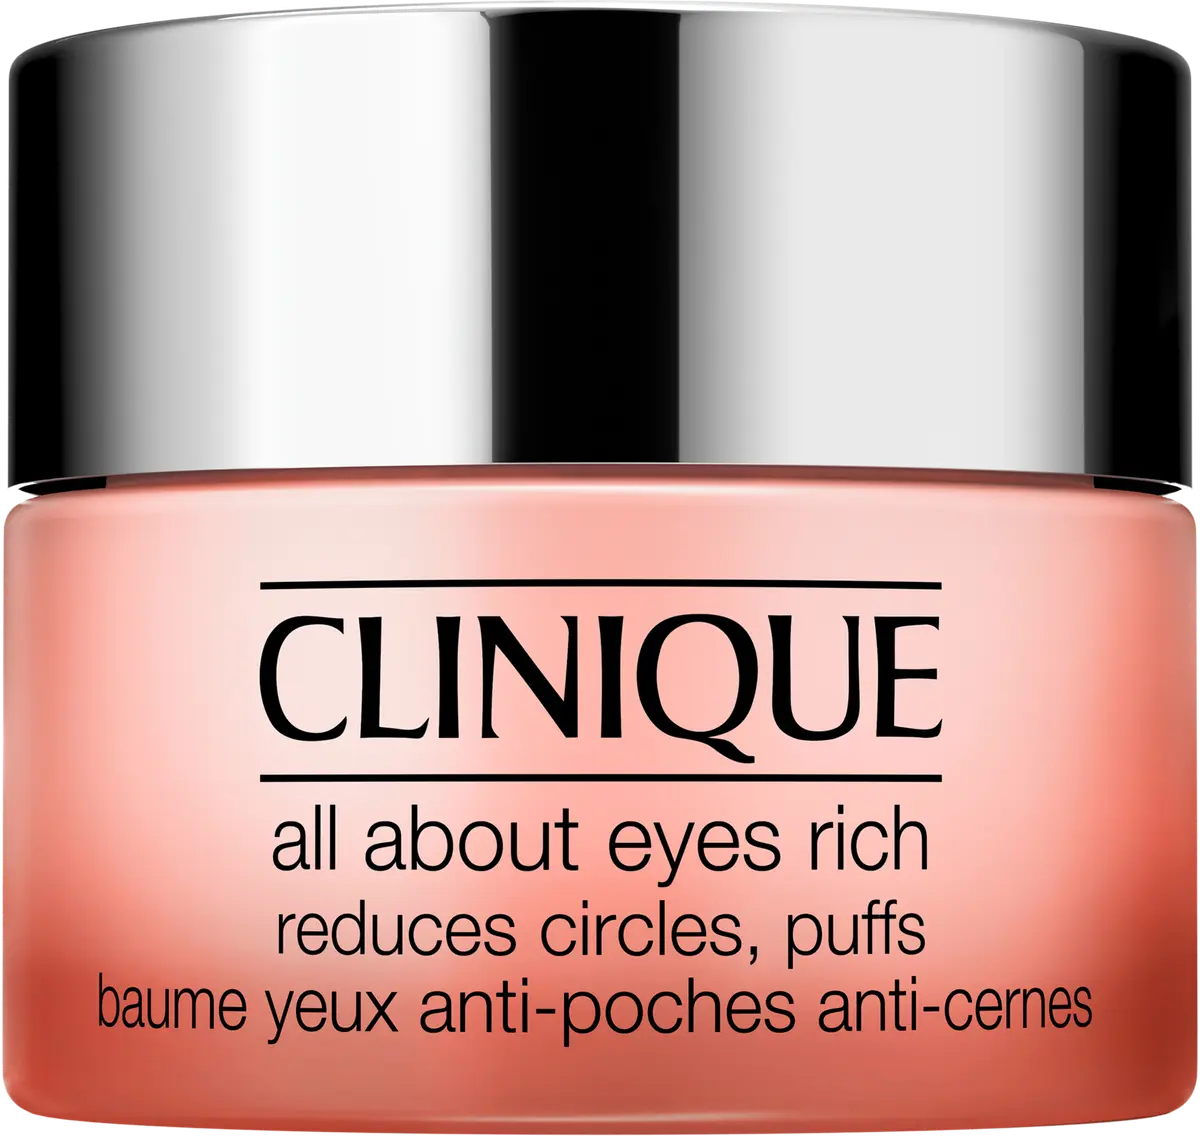 Clinique All About Eyes Rich silmänympärysvoide 15 ml